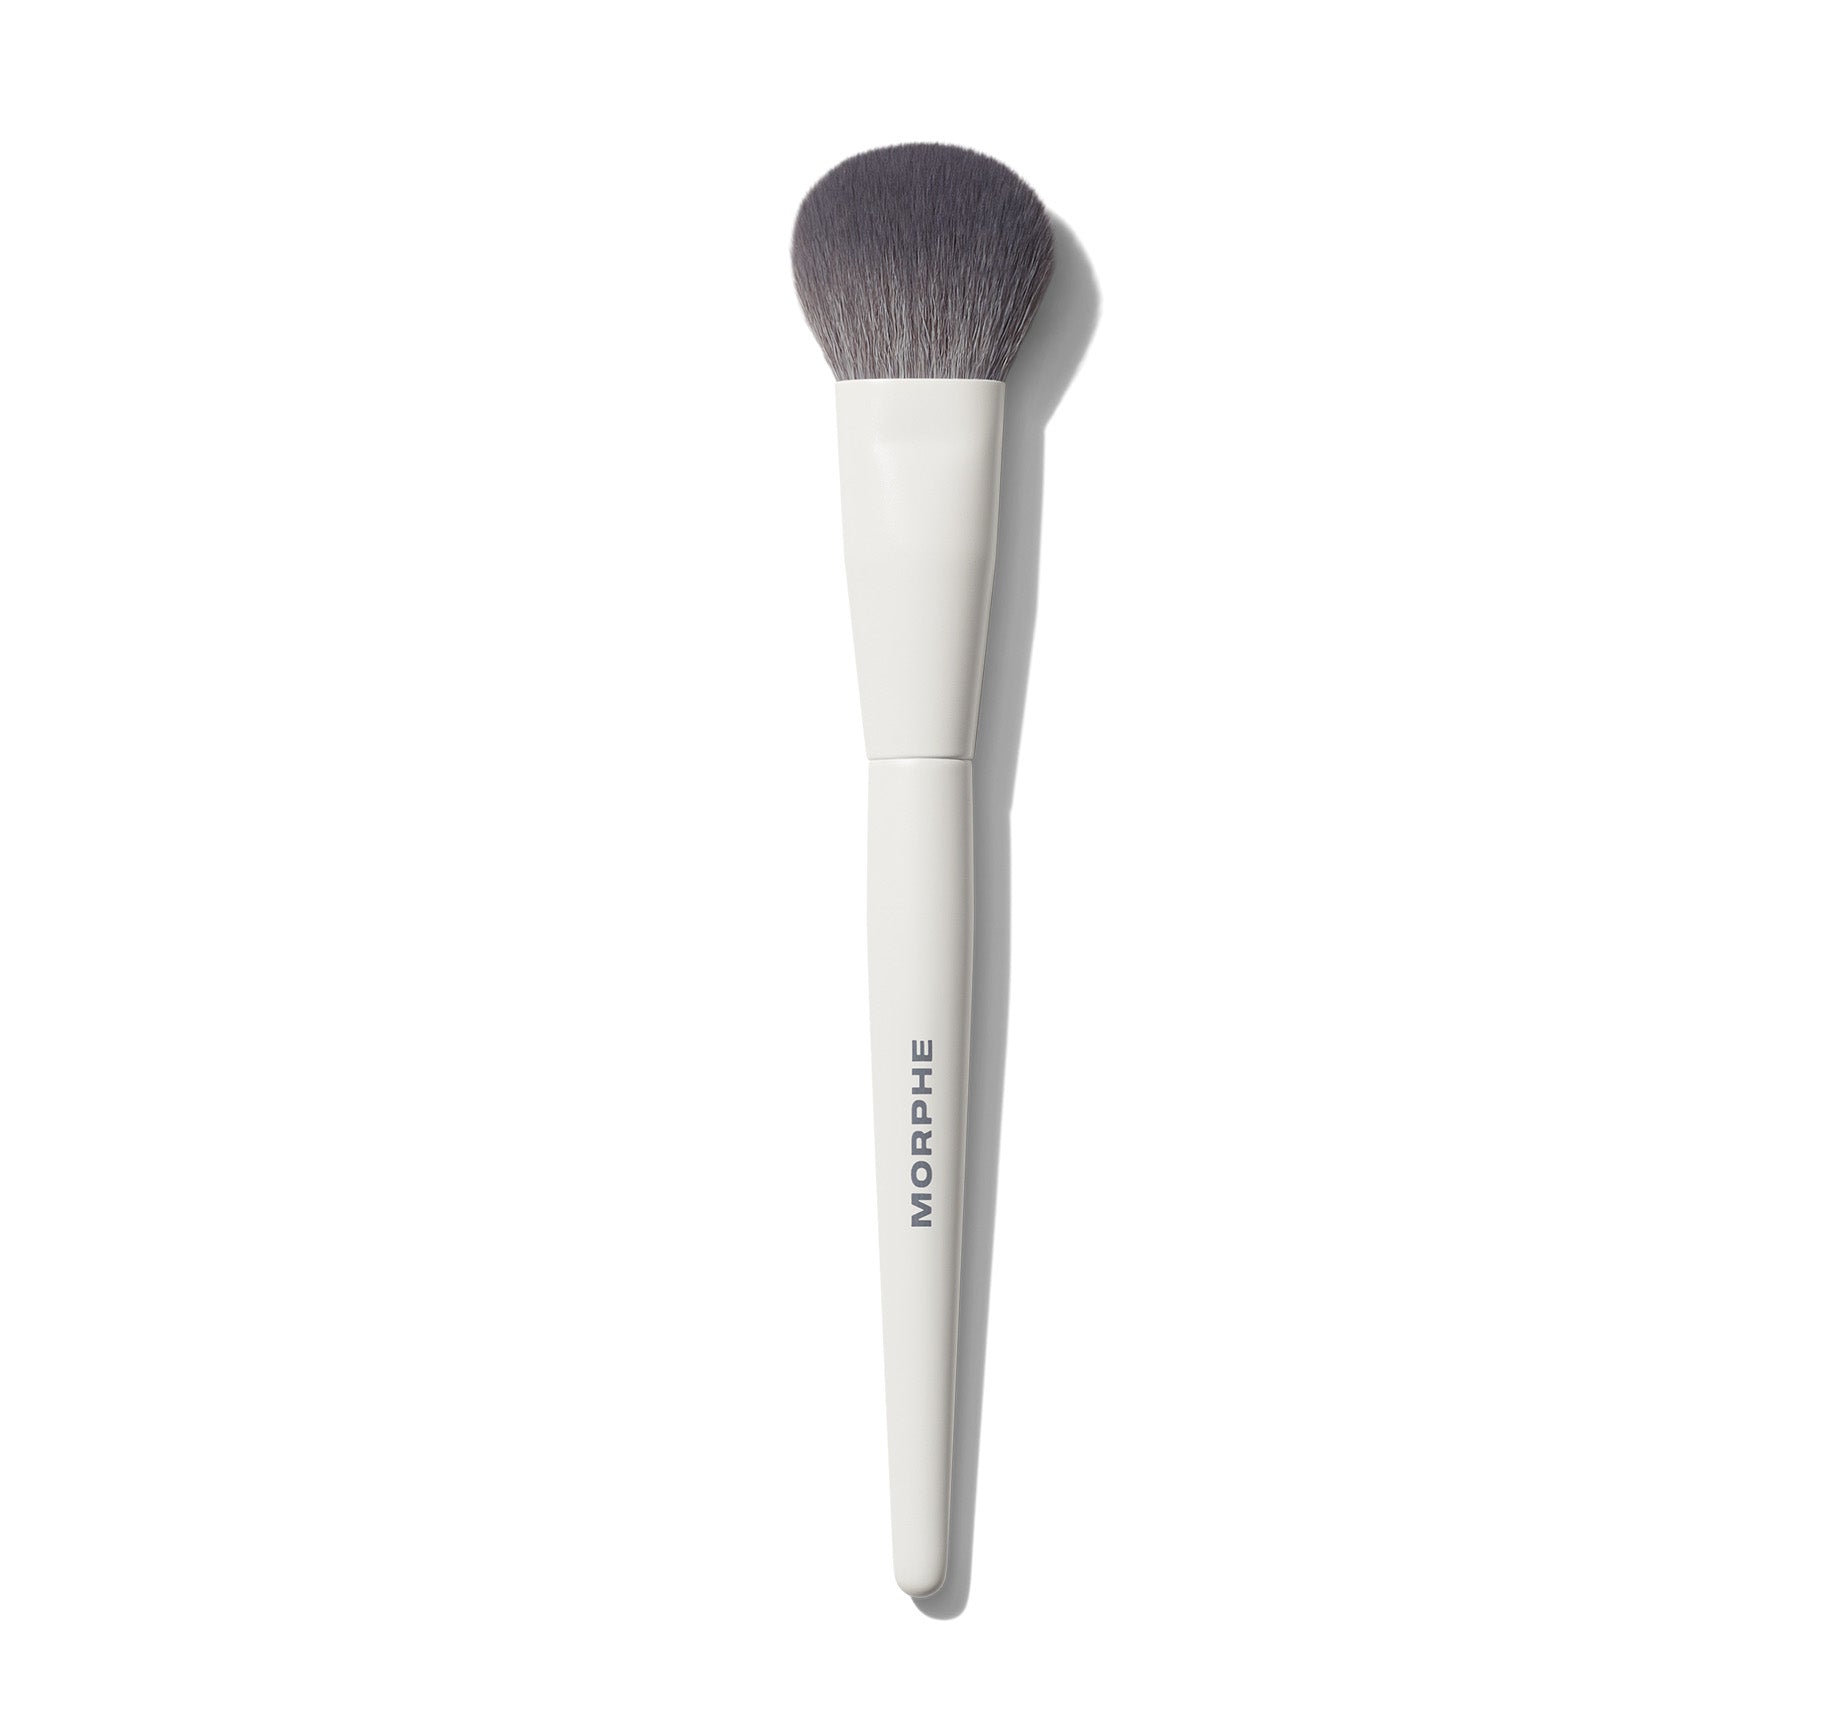 M201 Rounded Cream & Liquid Blush Brush - Image 1